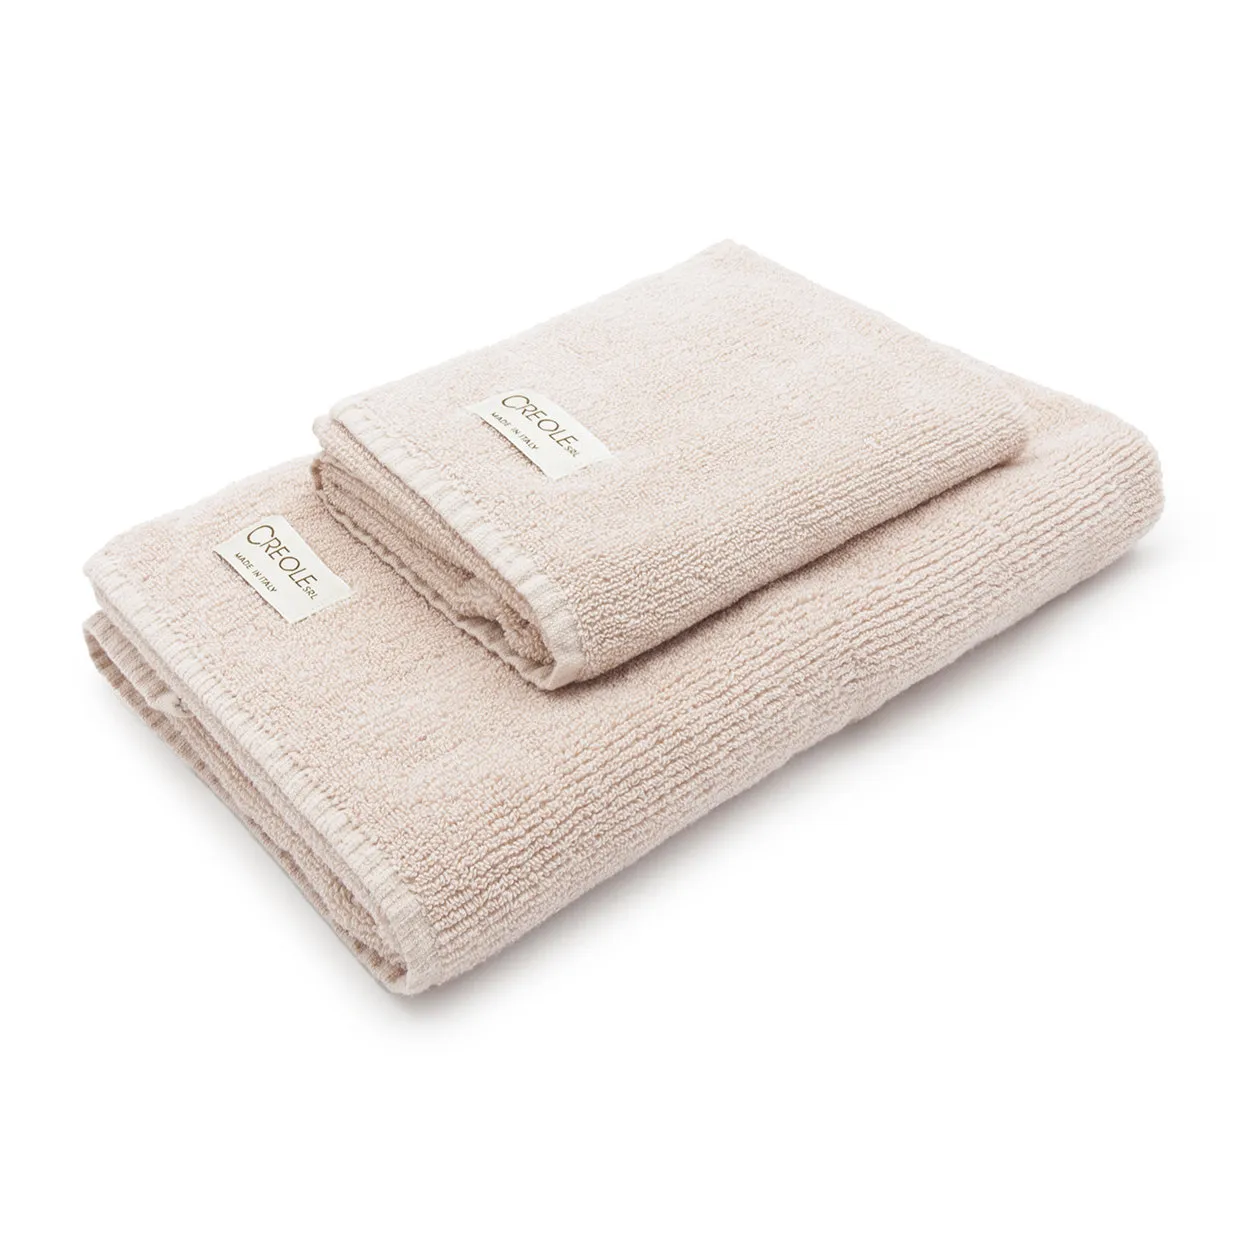 Set asciugamani Elisir (1 asciugamano viso + 1 asciugamano ospite), malva